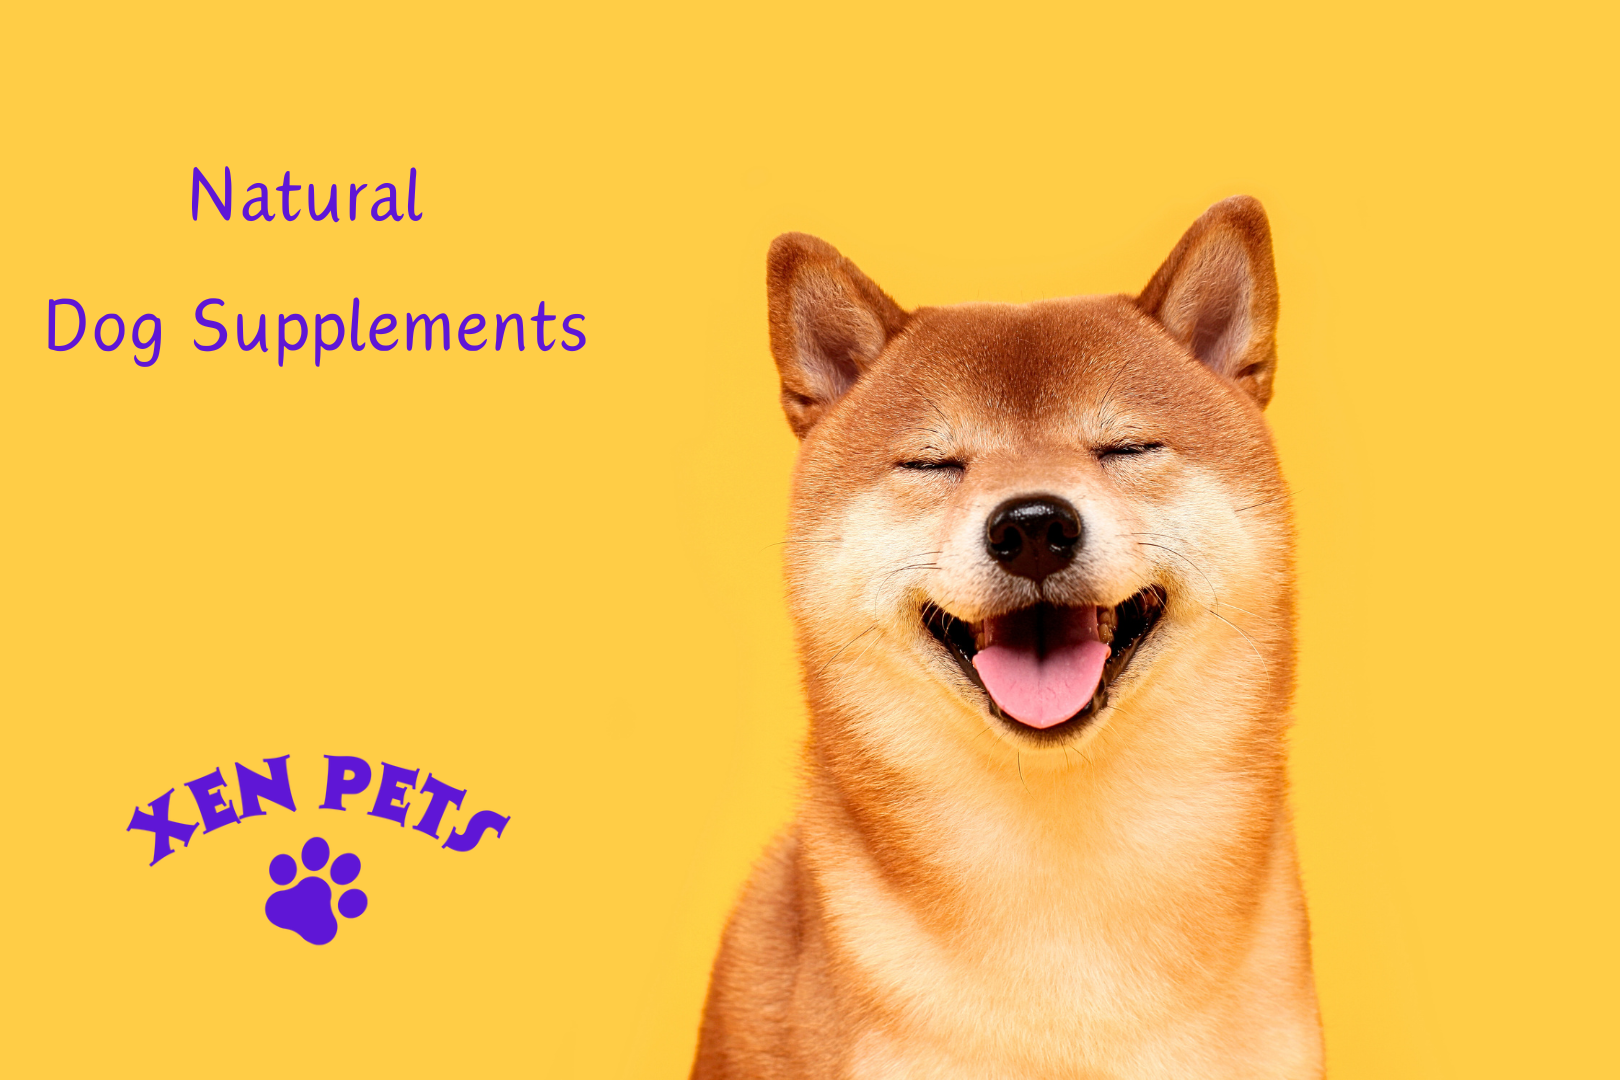 Xen Pets logo next to a smiling dog.